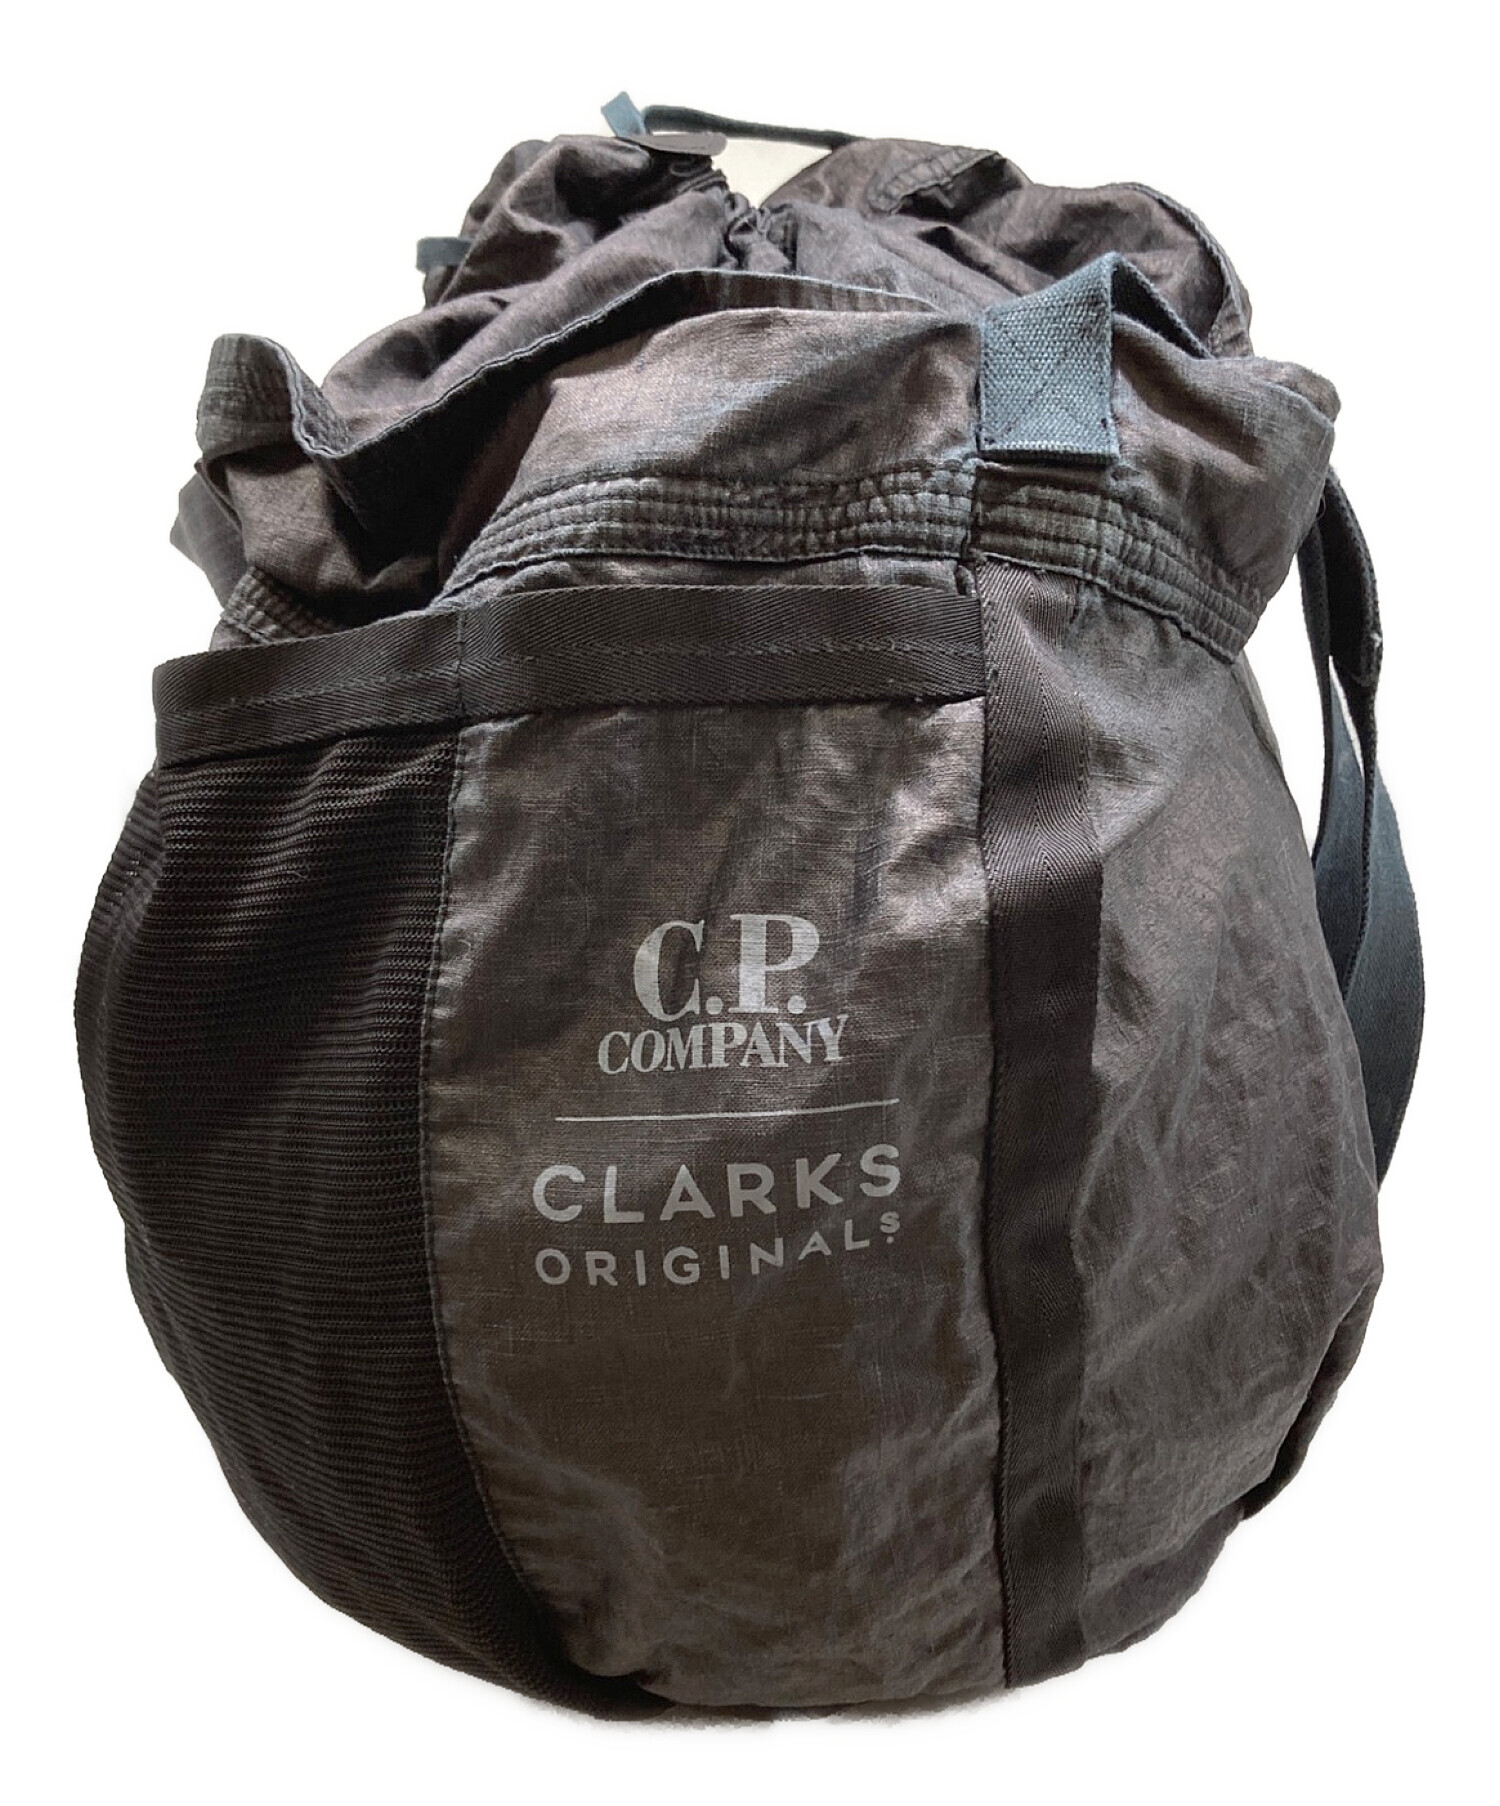 C.P COMPANY (シーピーカンパニー) CLARKS ORIGINALS (クラークス オリジナルズ) コラボクロスボディバッグ ブラック